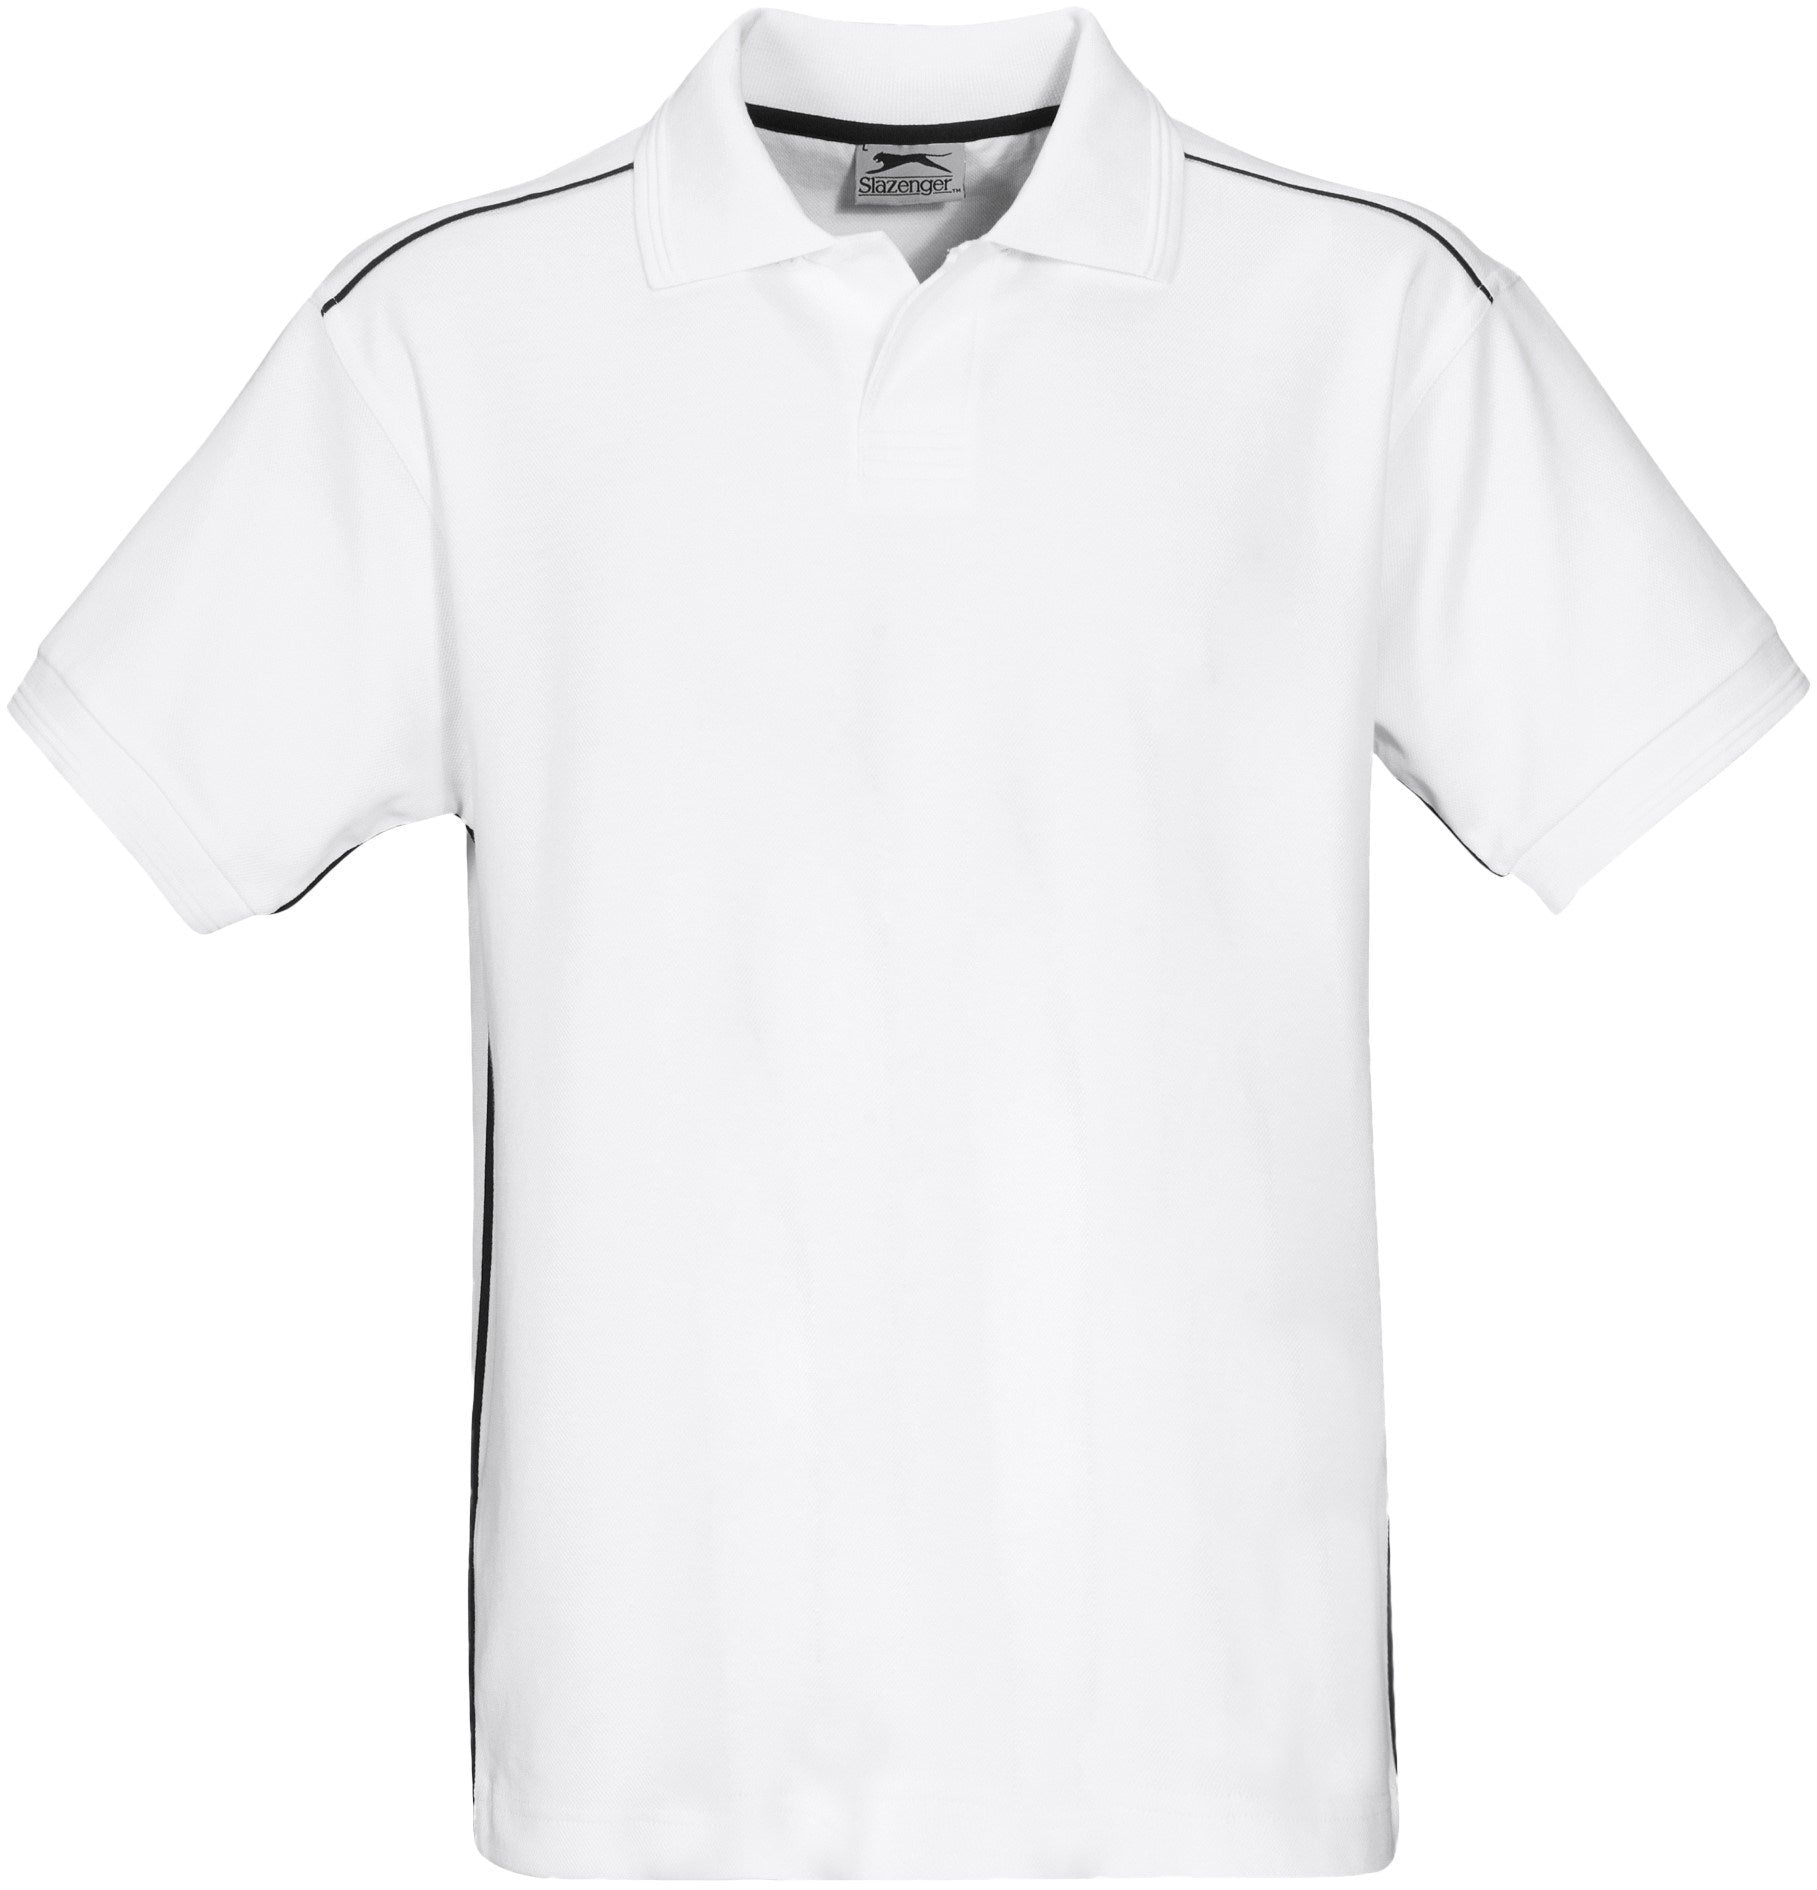 Mens Backhand Golf Shirt - Black Only-2XL-White-W